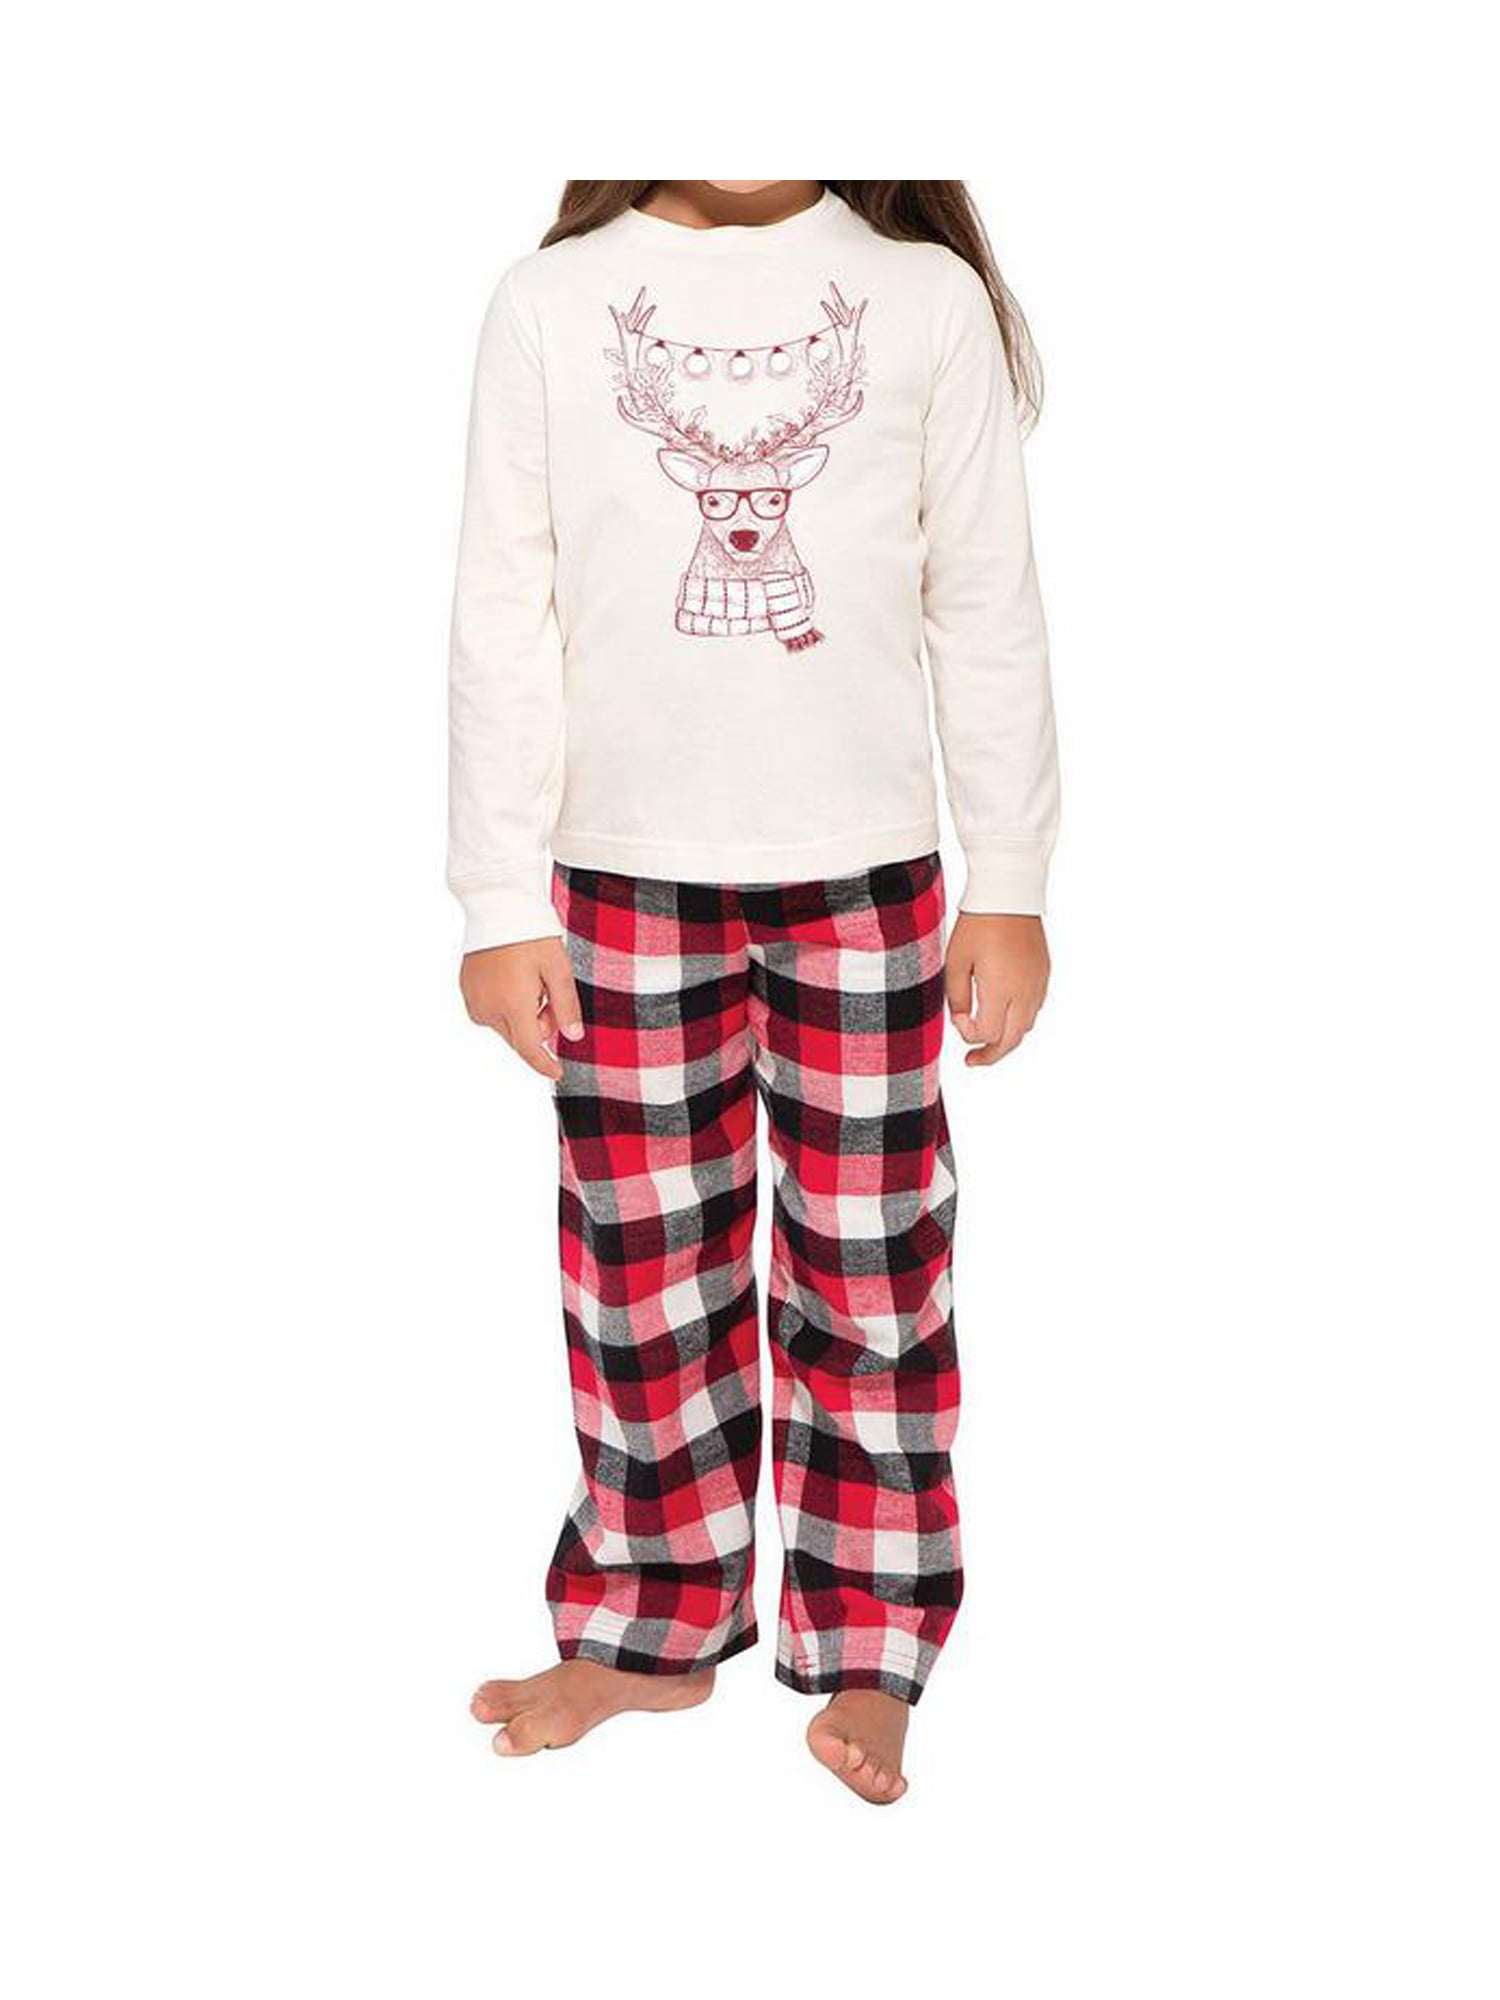 Details about   Christmas Adults Kids Family Matching Elk Print Pajamas Set Nightwear Sleepwear